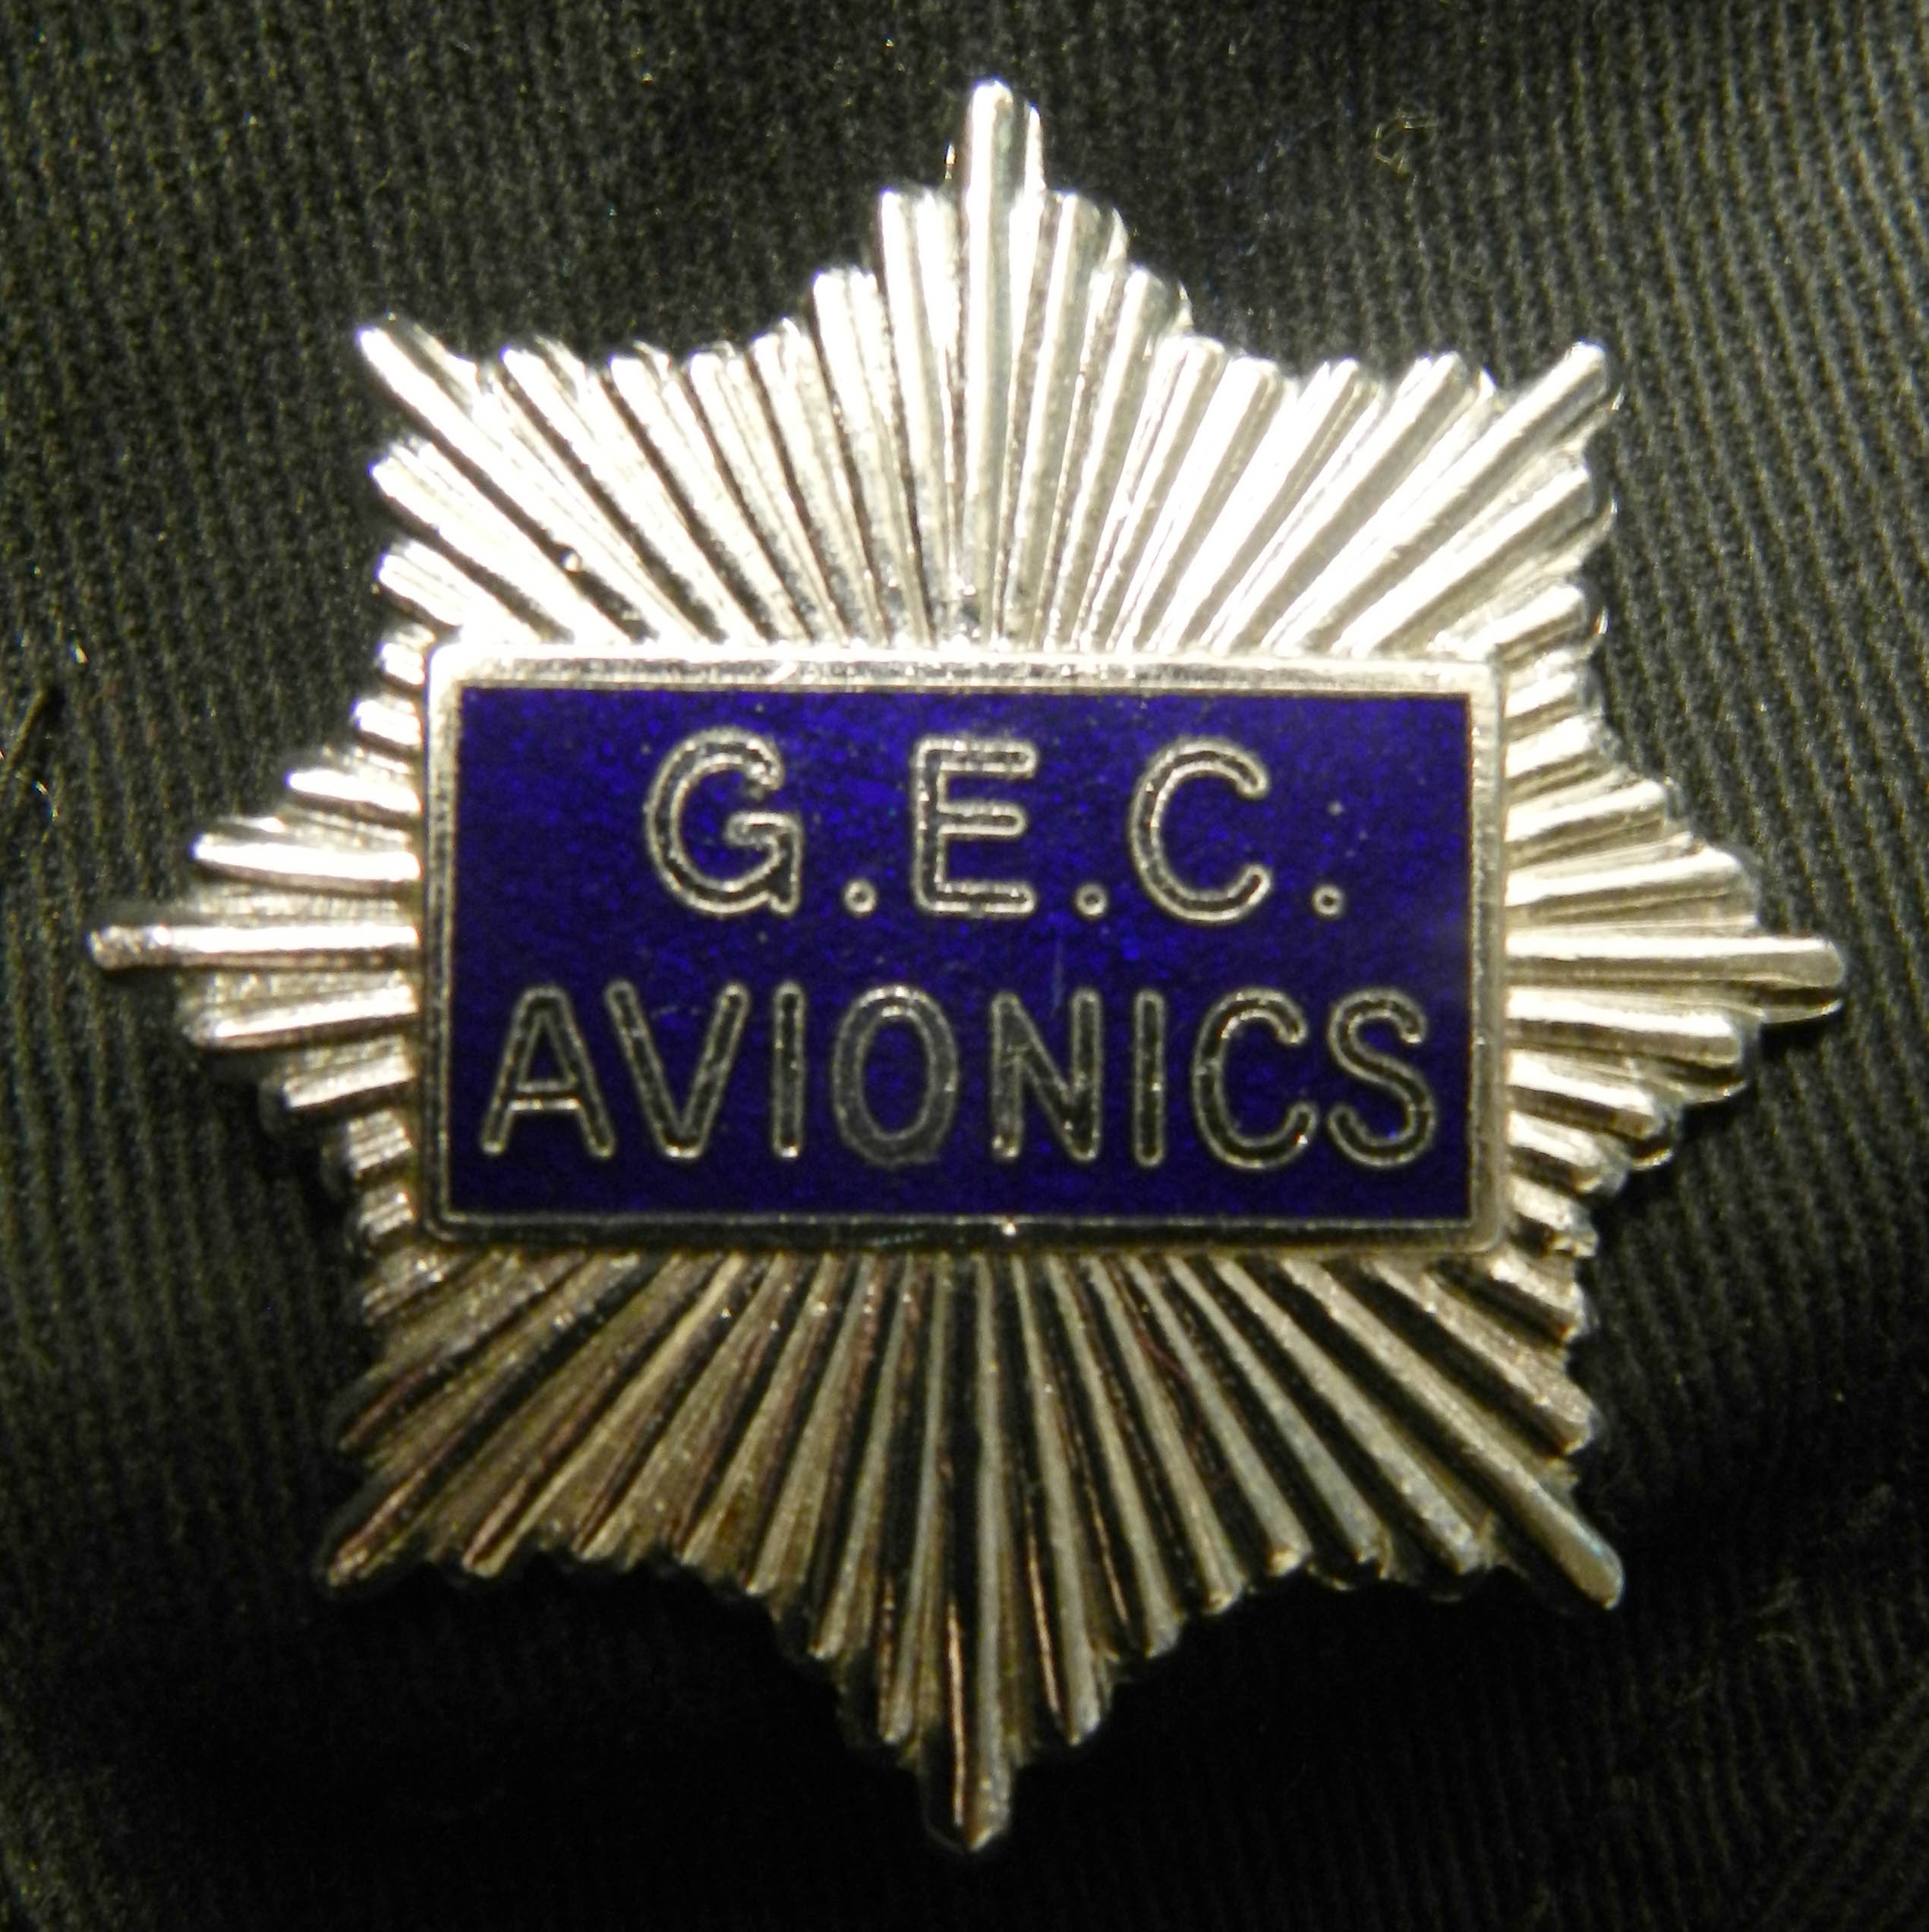 GEC Avionics Badge